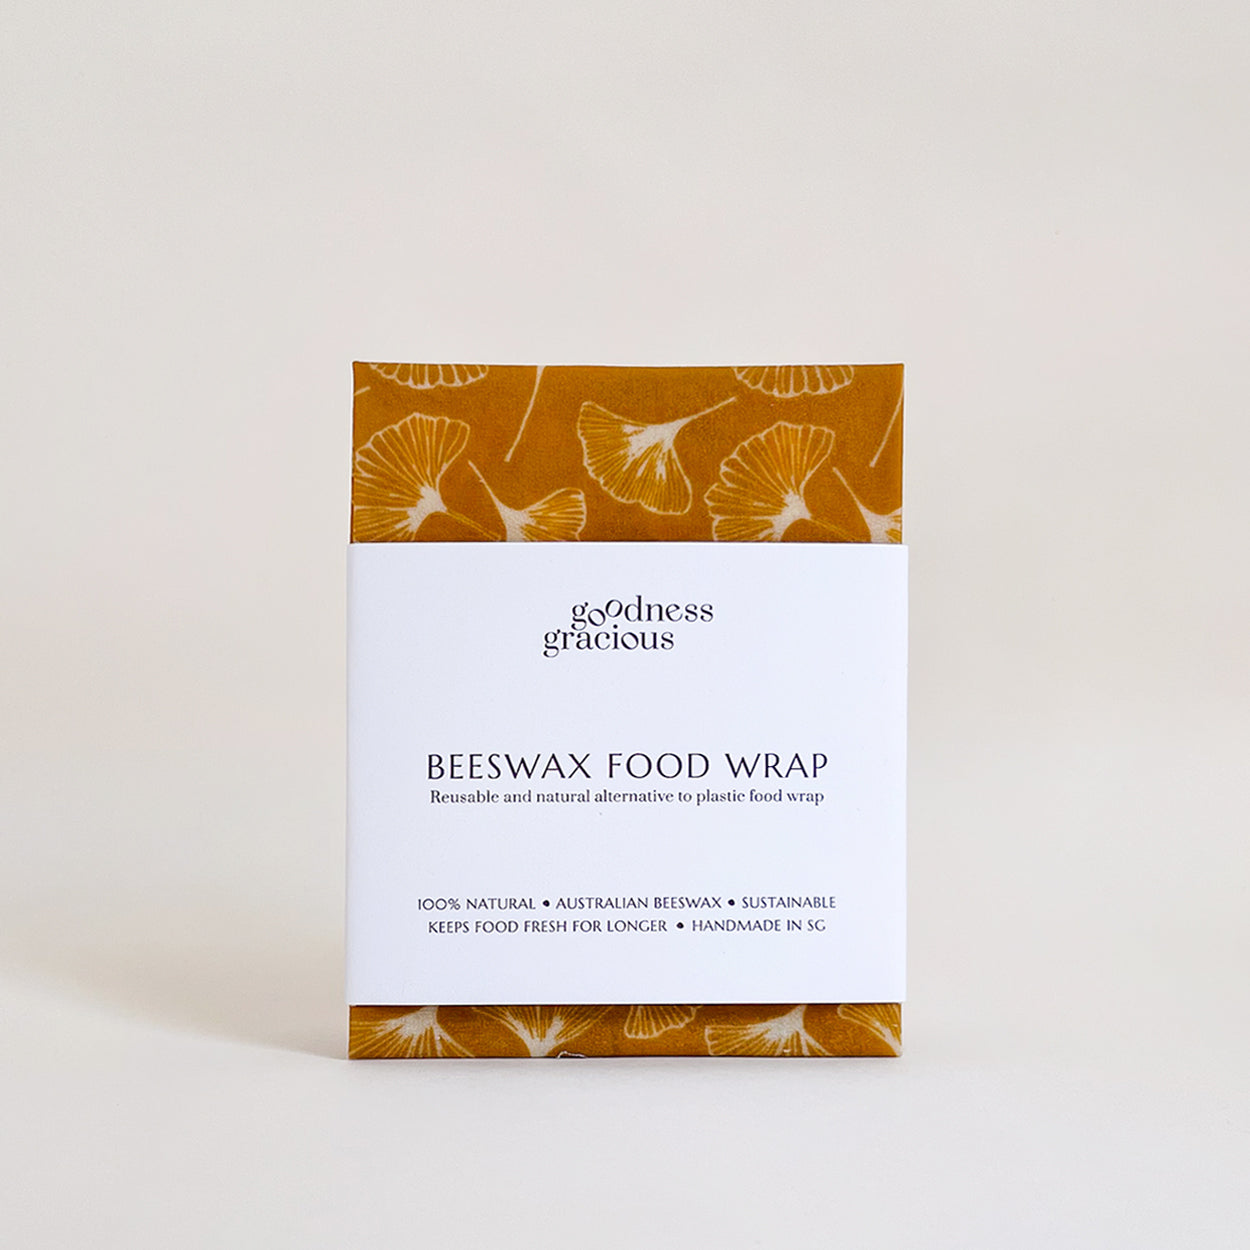 Gingko Beeswax Food Wrap